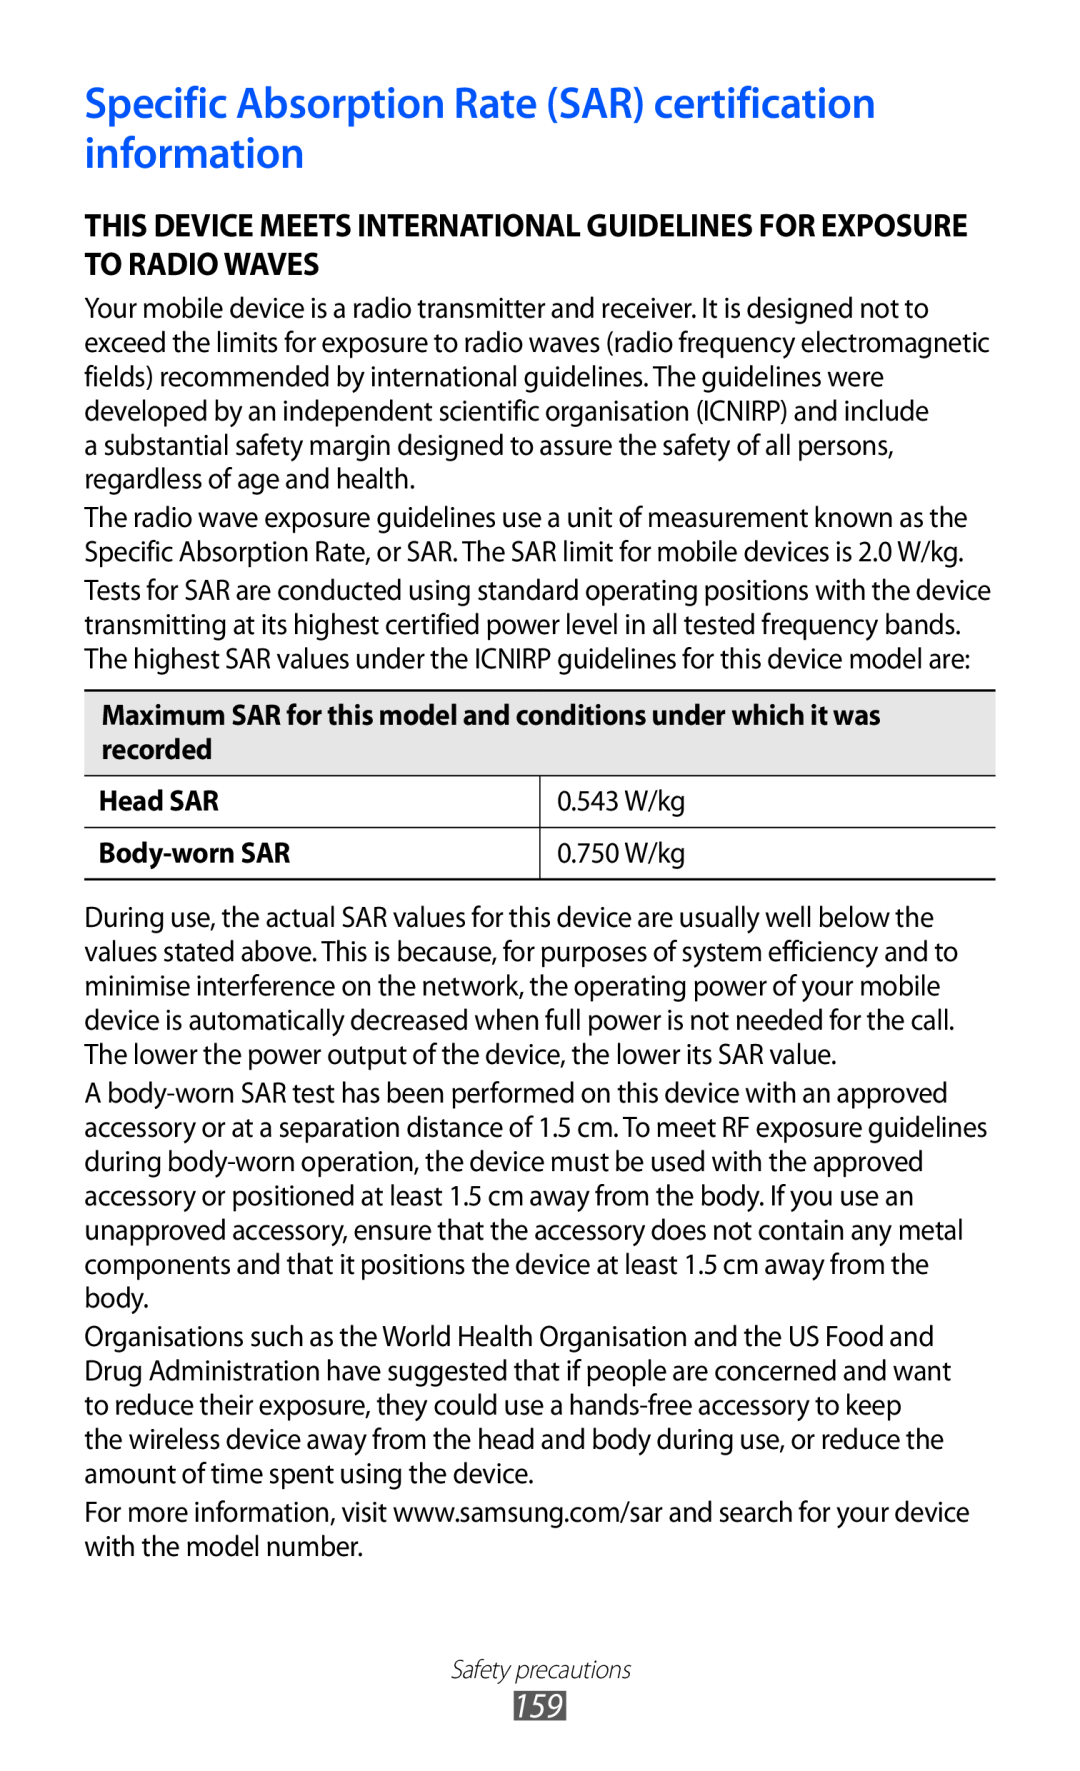 Samsung GT-I9070HKEKSA manual Specific Absorption Rate SAR certification information, Head SAR, 0.543 W/kg, Body-worn SAR 